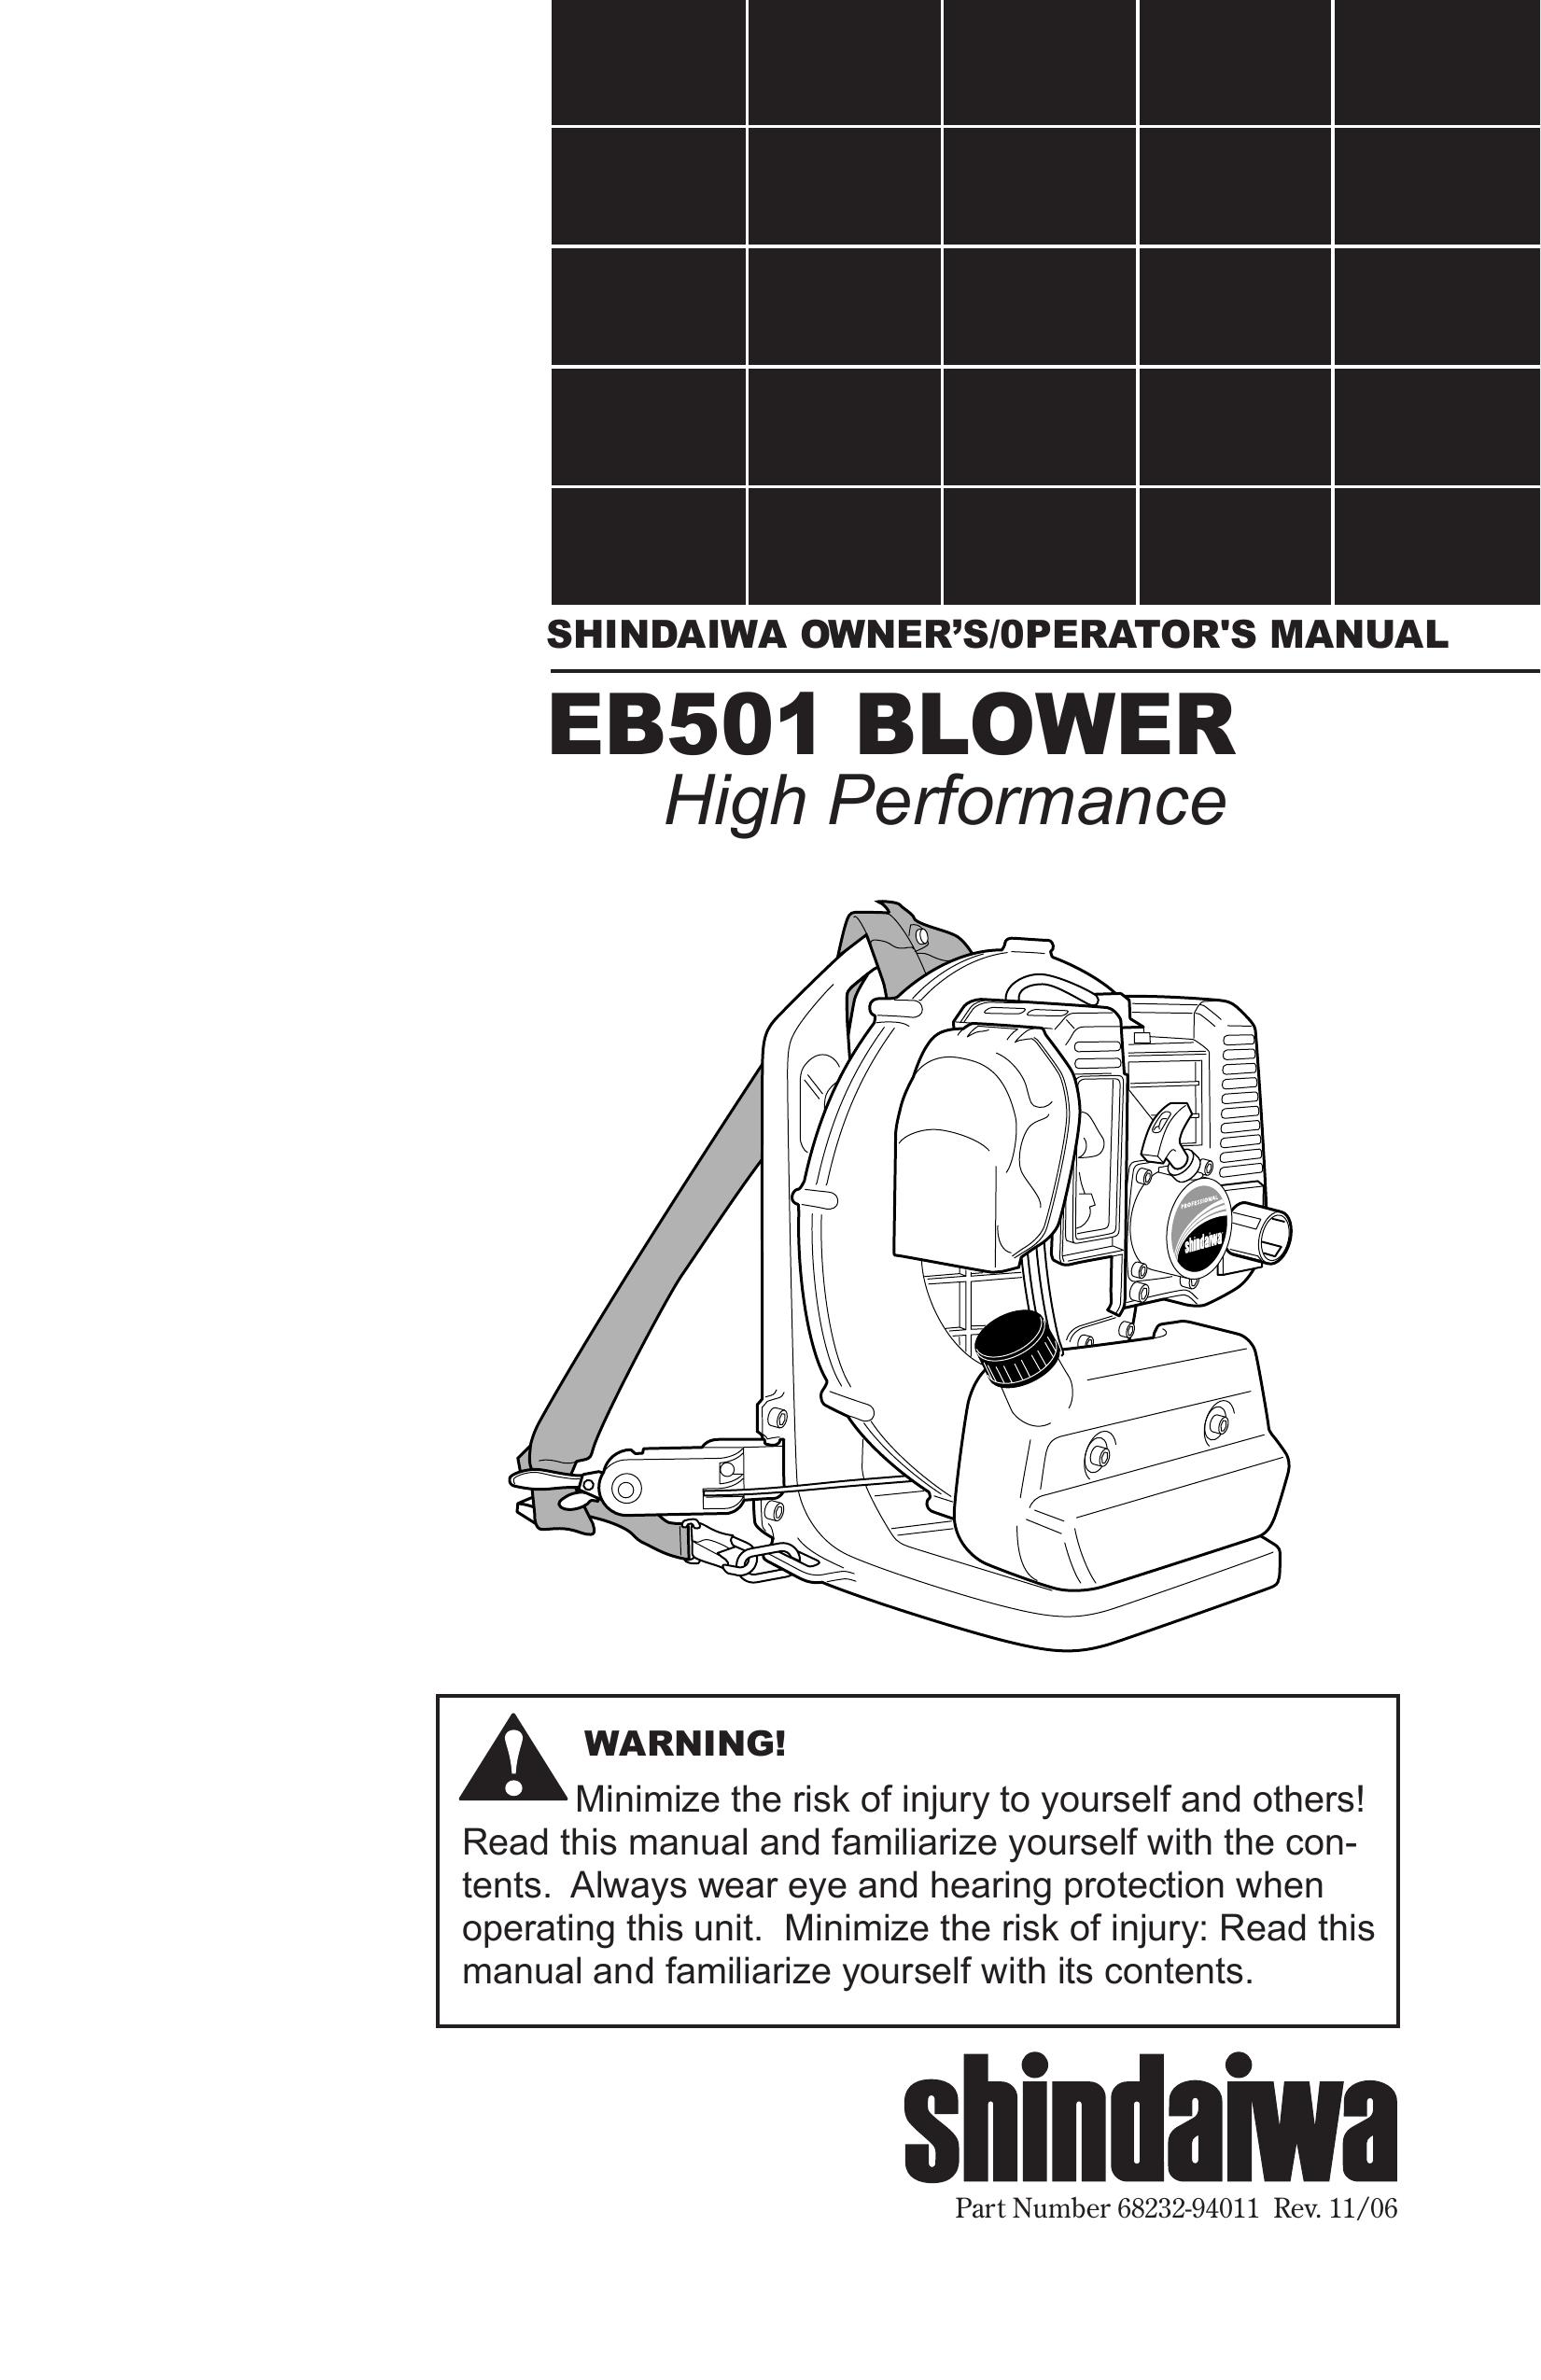 Shindaiwa 68232-94011 Blower User Manual